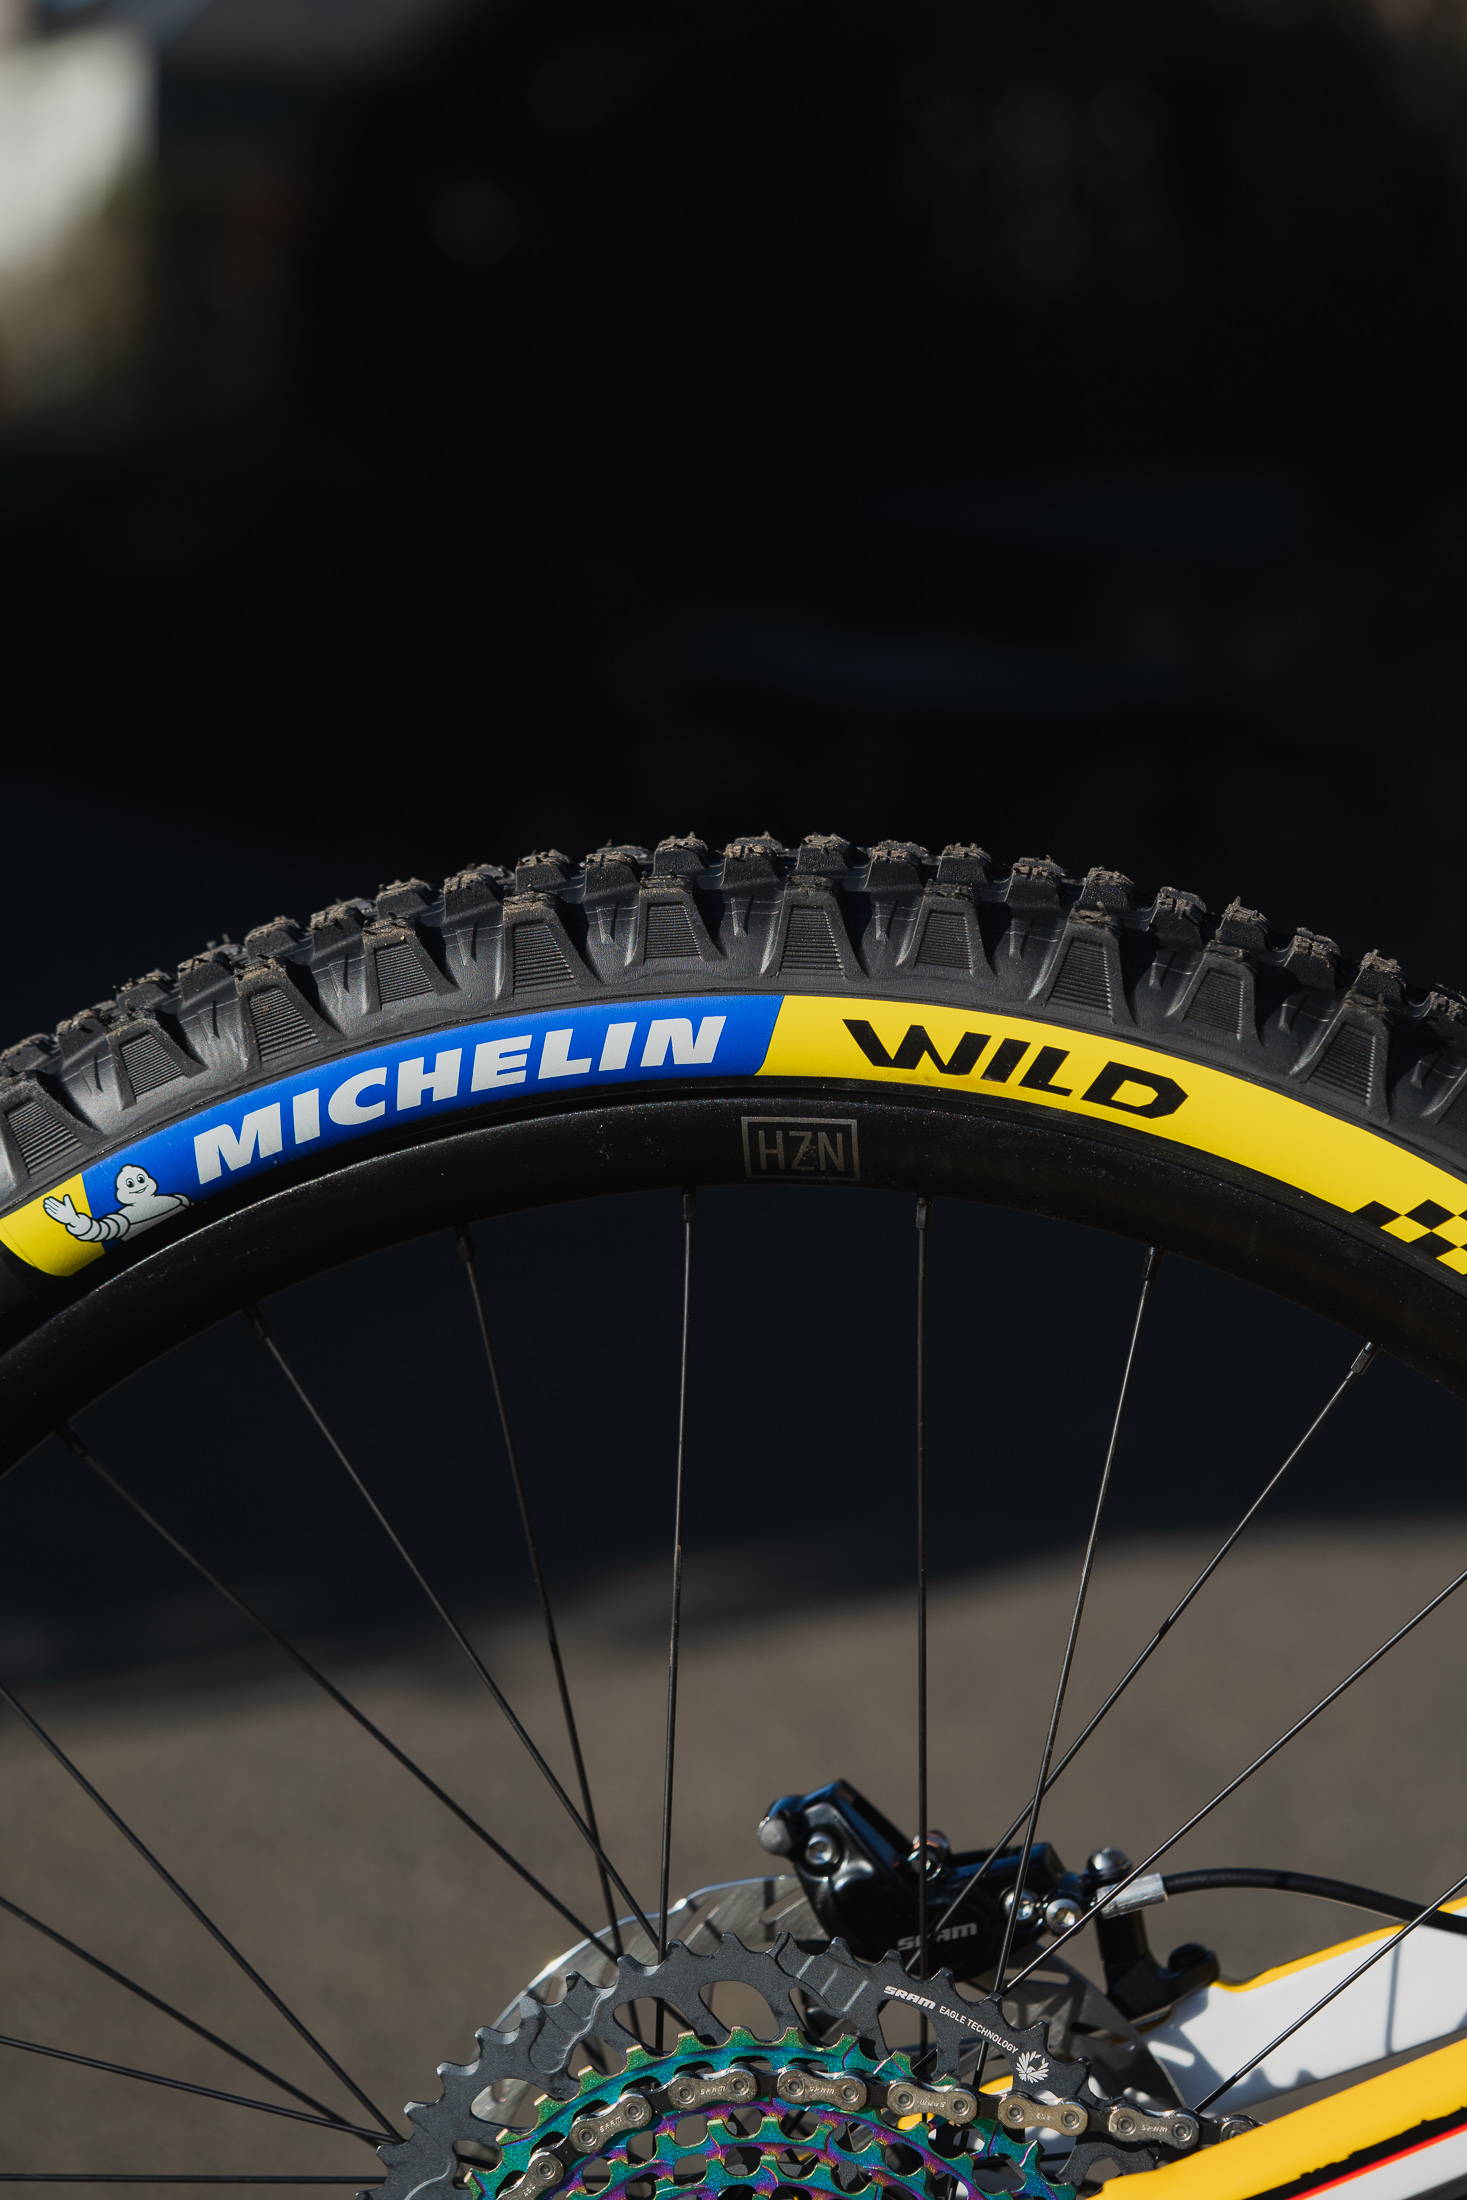 The Michelin Wild enduro tires